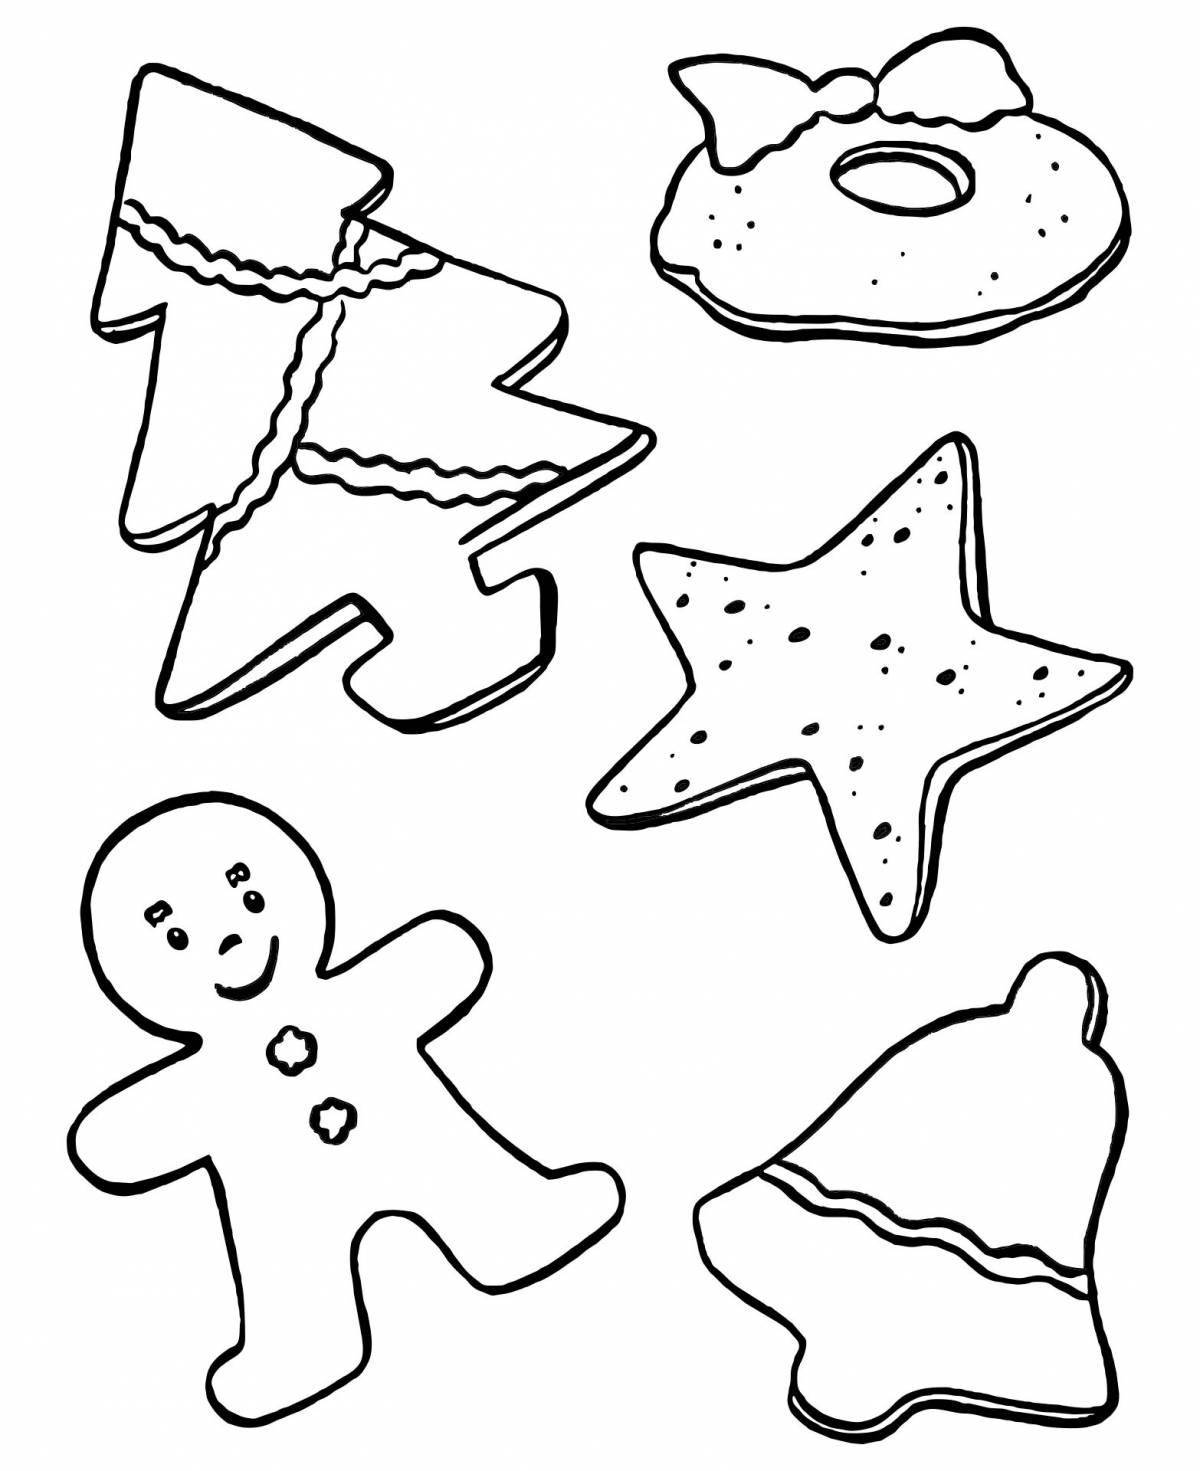 Magic gingerbread coloring for kids